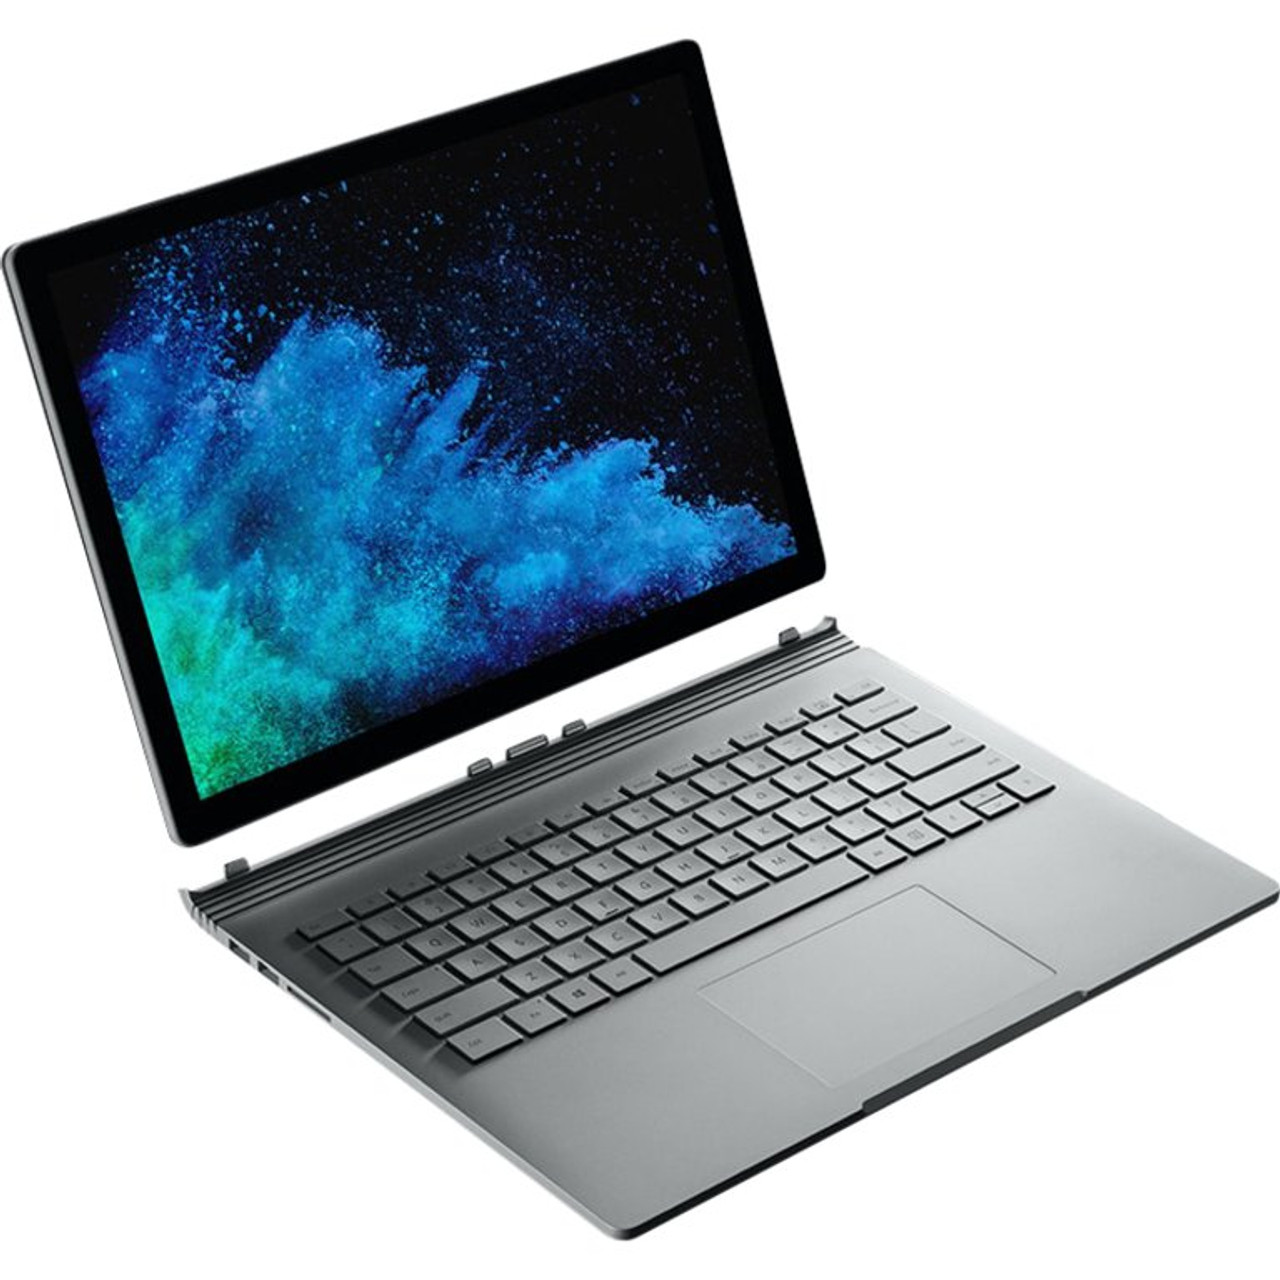 Kneden vice versa Rafflesia Arnoldi Microsoft Surface Book 2 - Intel Core i7 16GB 512GB - 13" Touchscreen  2-in-1 Laptop - Silver